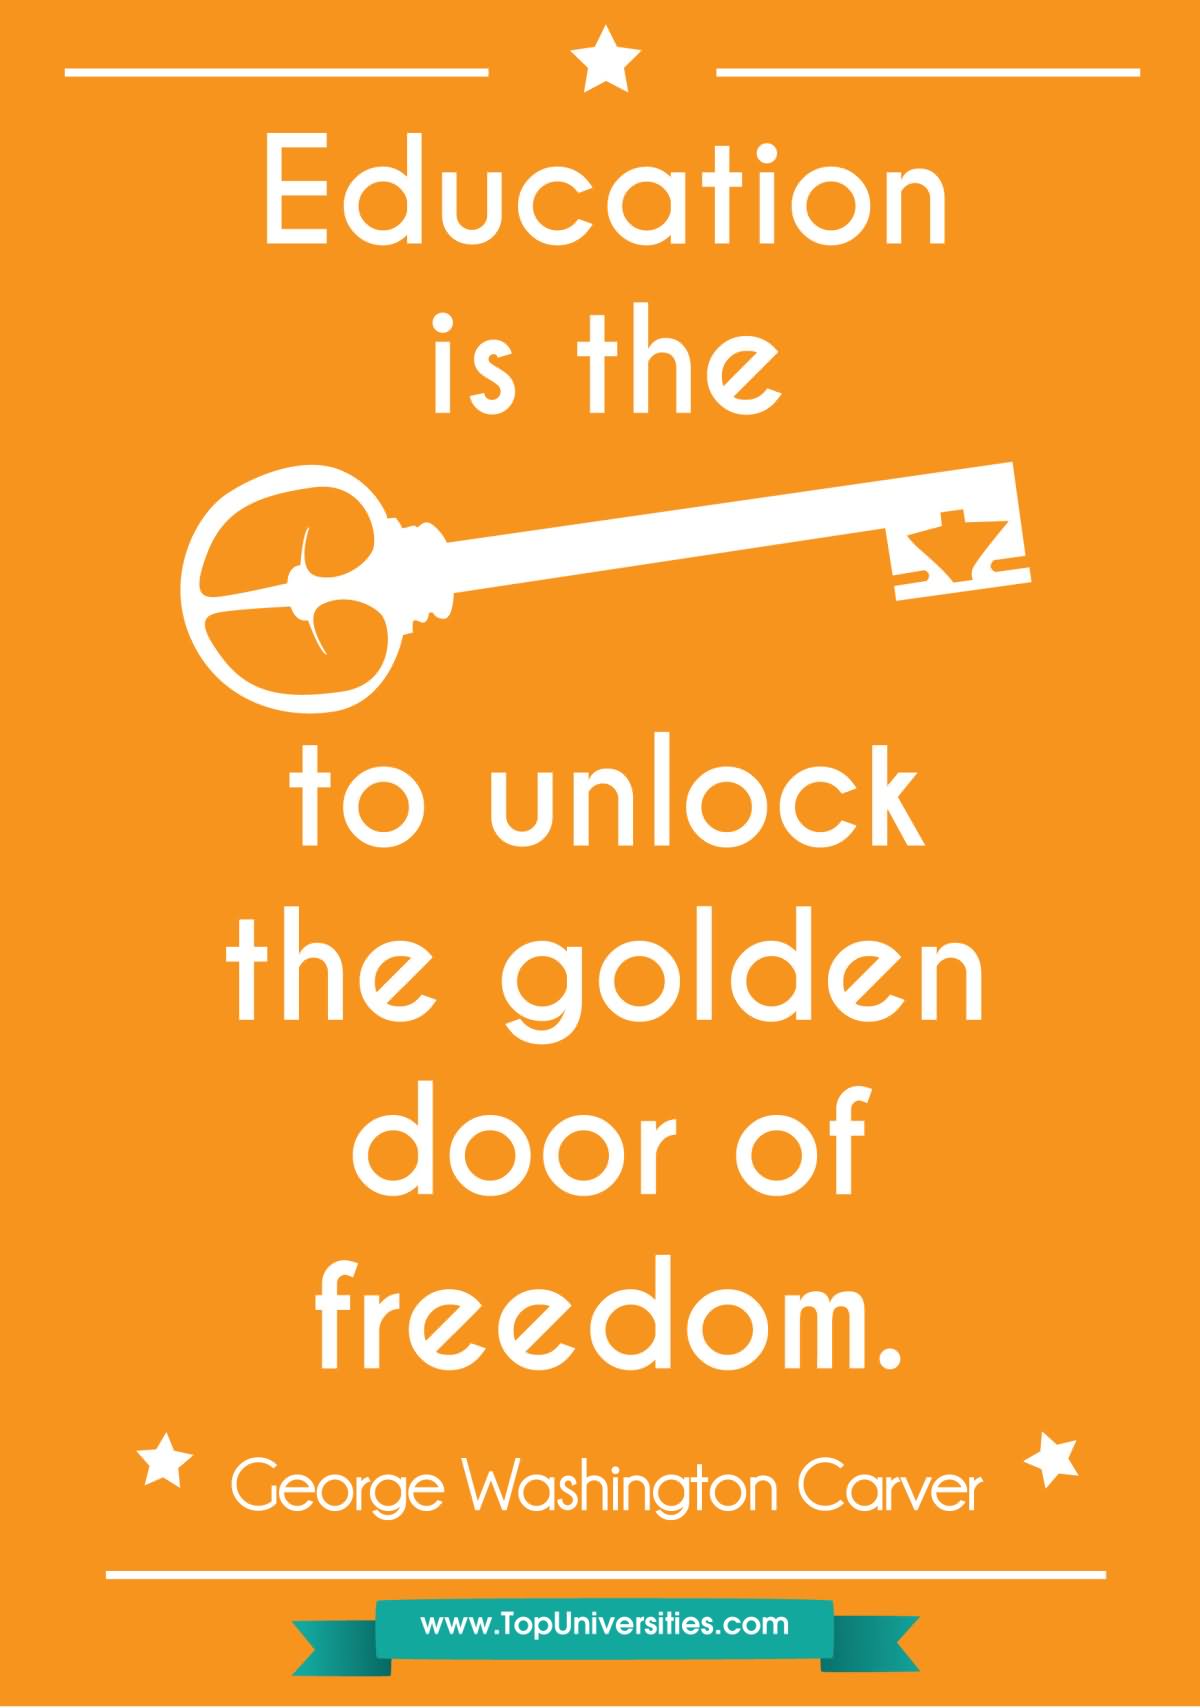 Education is the key to unlock the golden door of freedom.